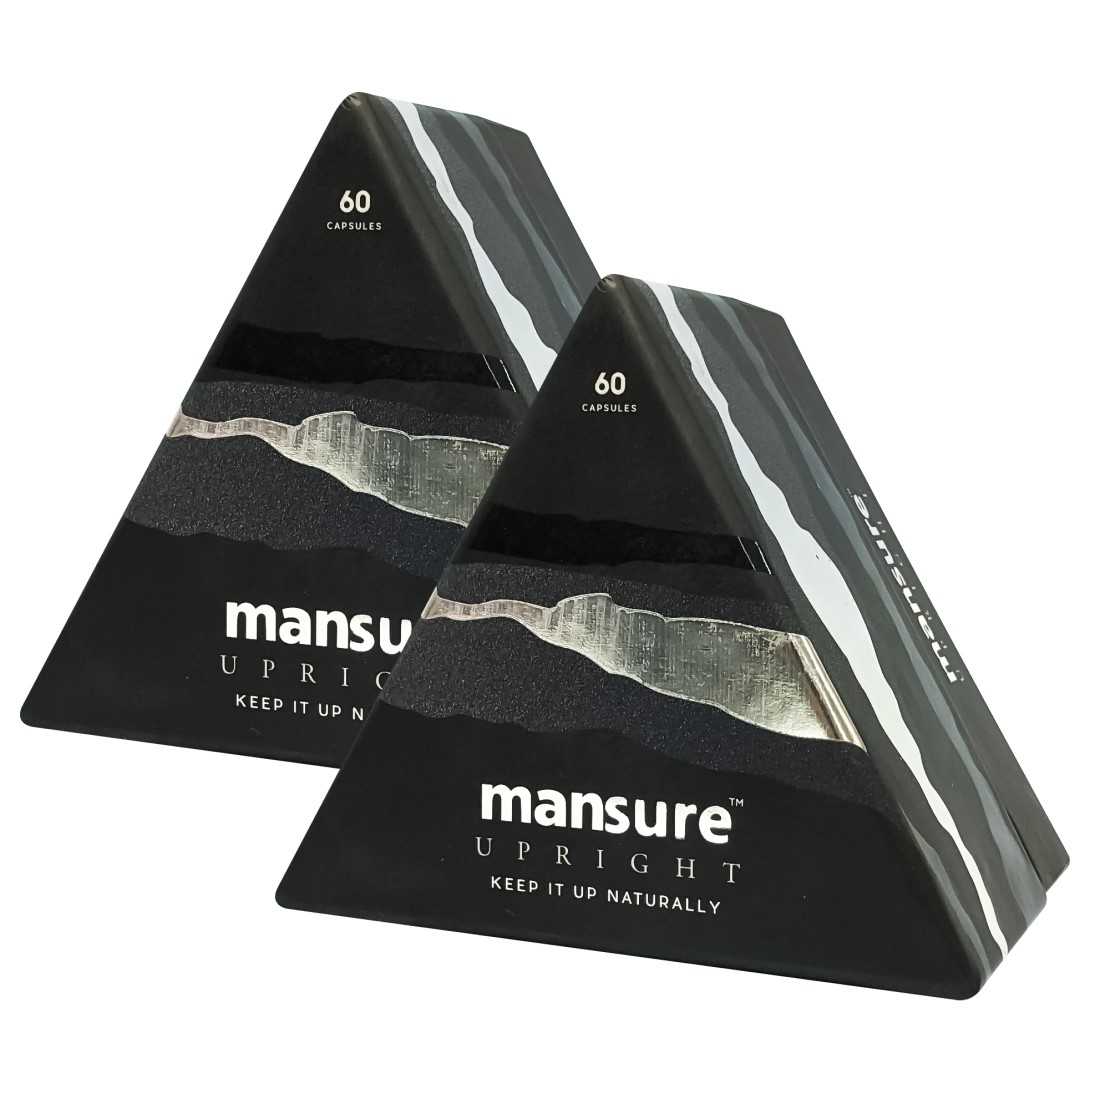 ManSure Pack of 2 ManSure UPRIGHT for Men's Health - 60 Capsules